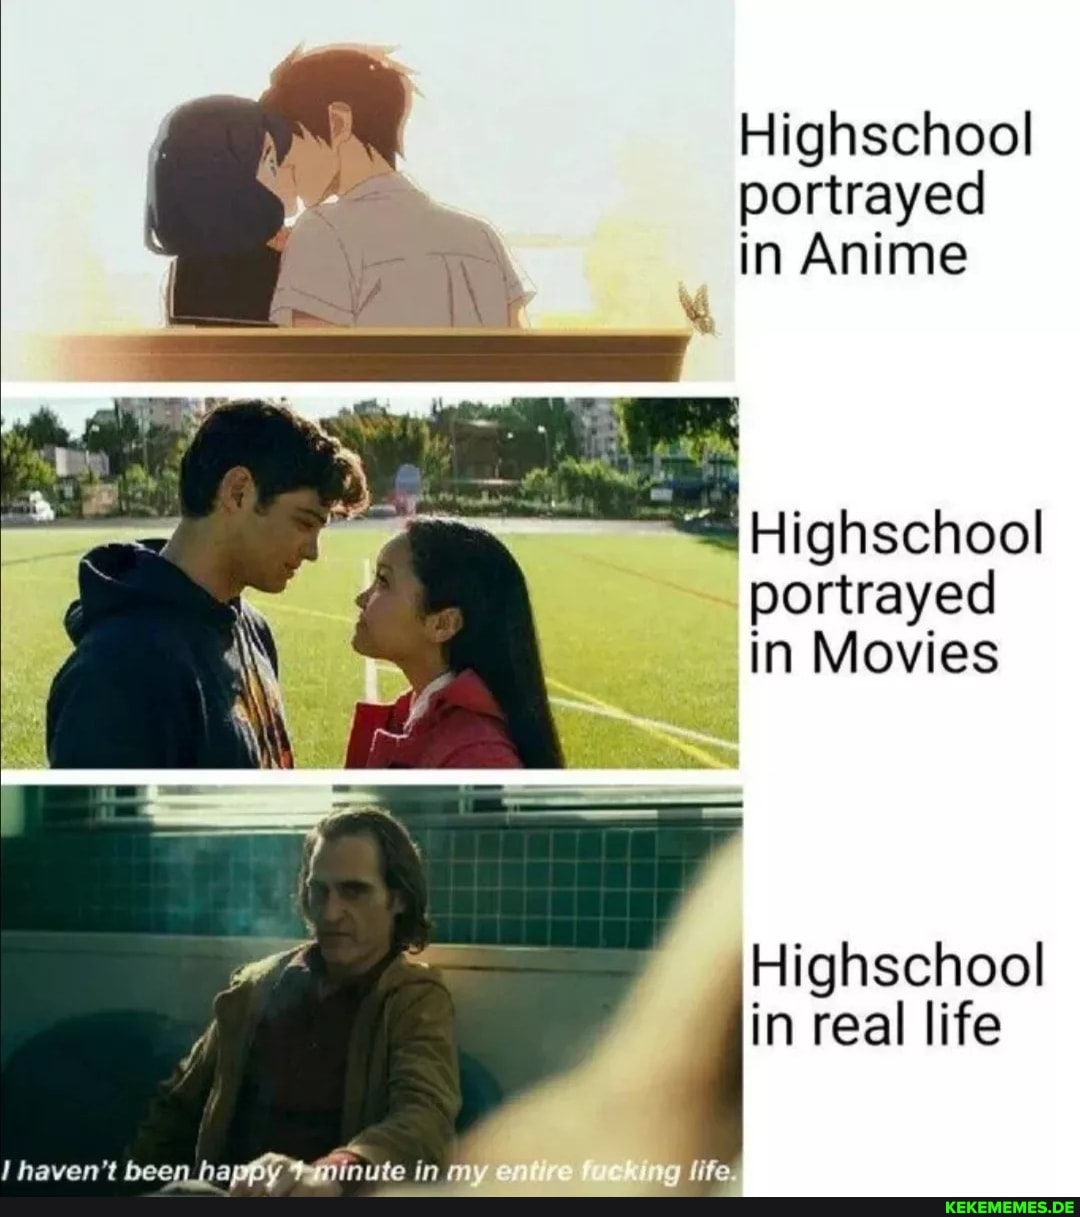 Highschool portrayed in Anime Highschool portrayed in Movies Highschool in real 